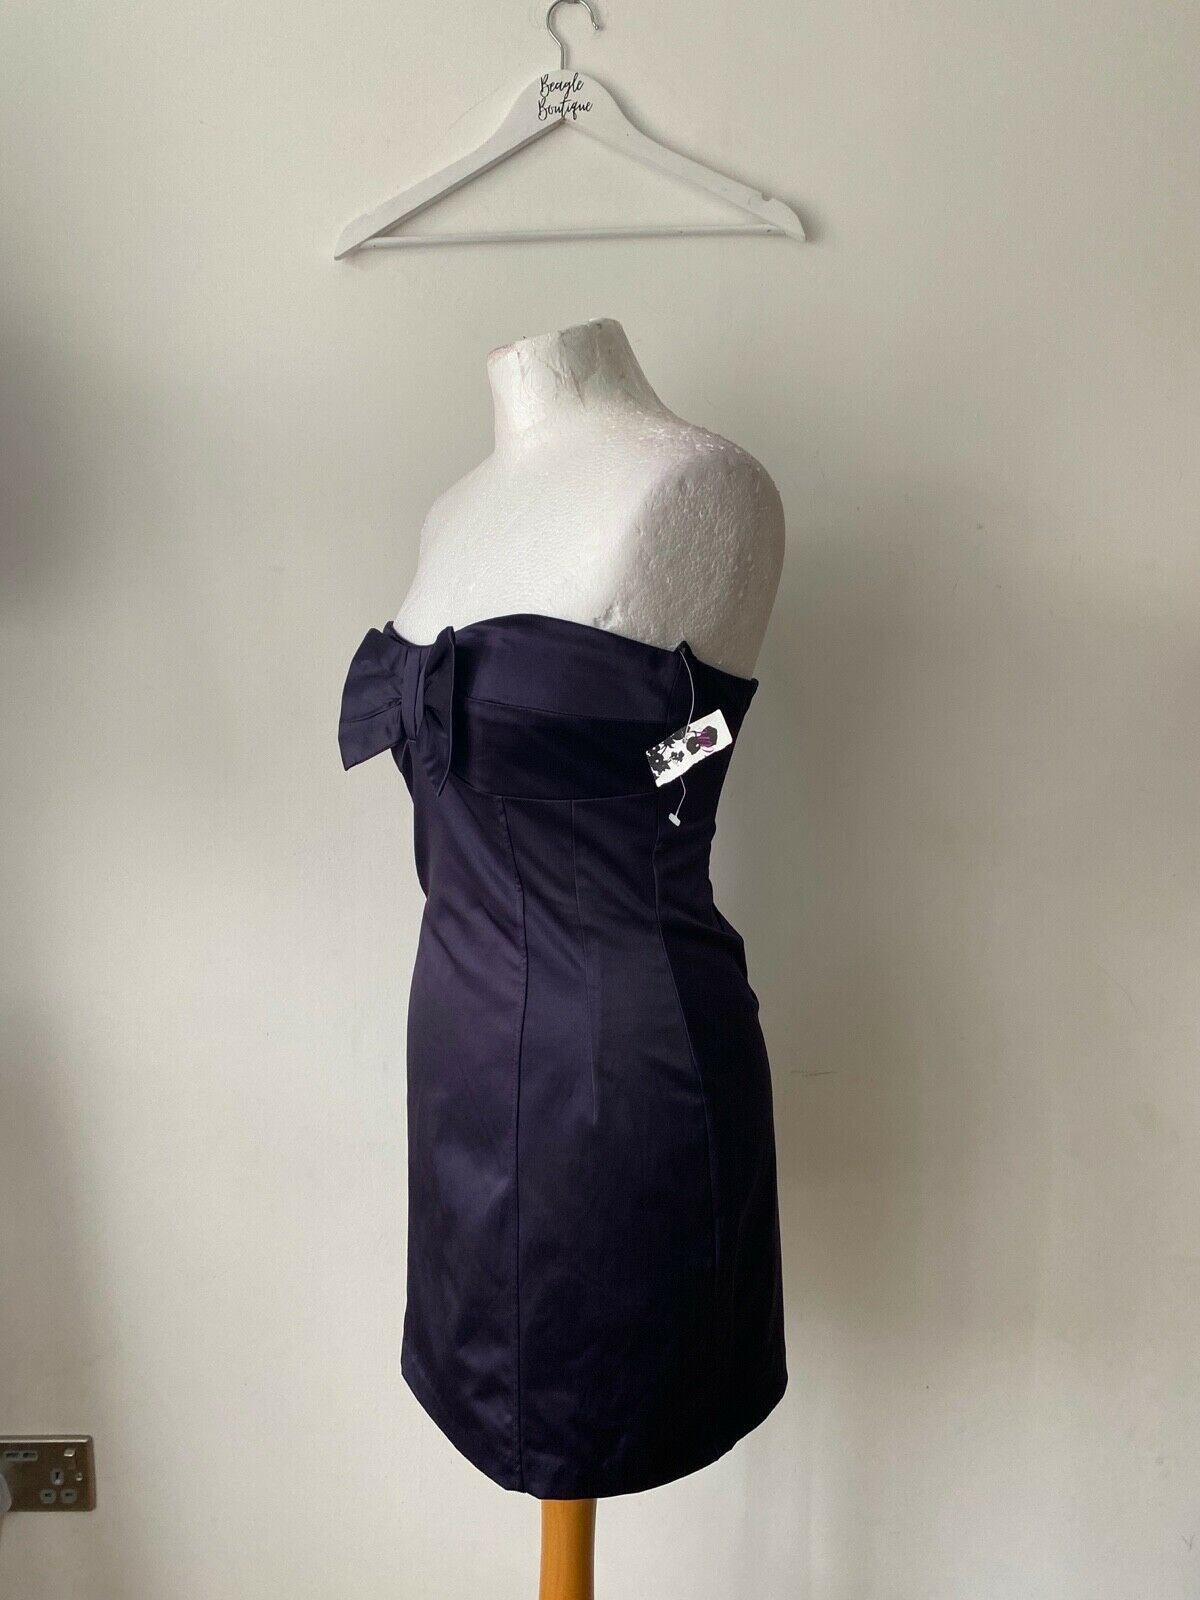 Elise Ryan Strapless Bodycon Dress Size 12 Bow Detail Dark Purple